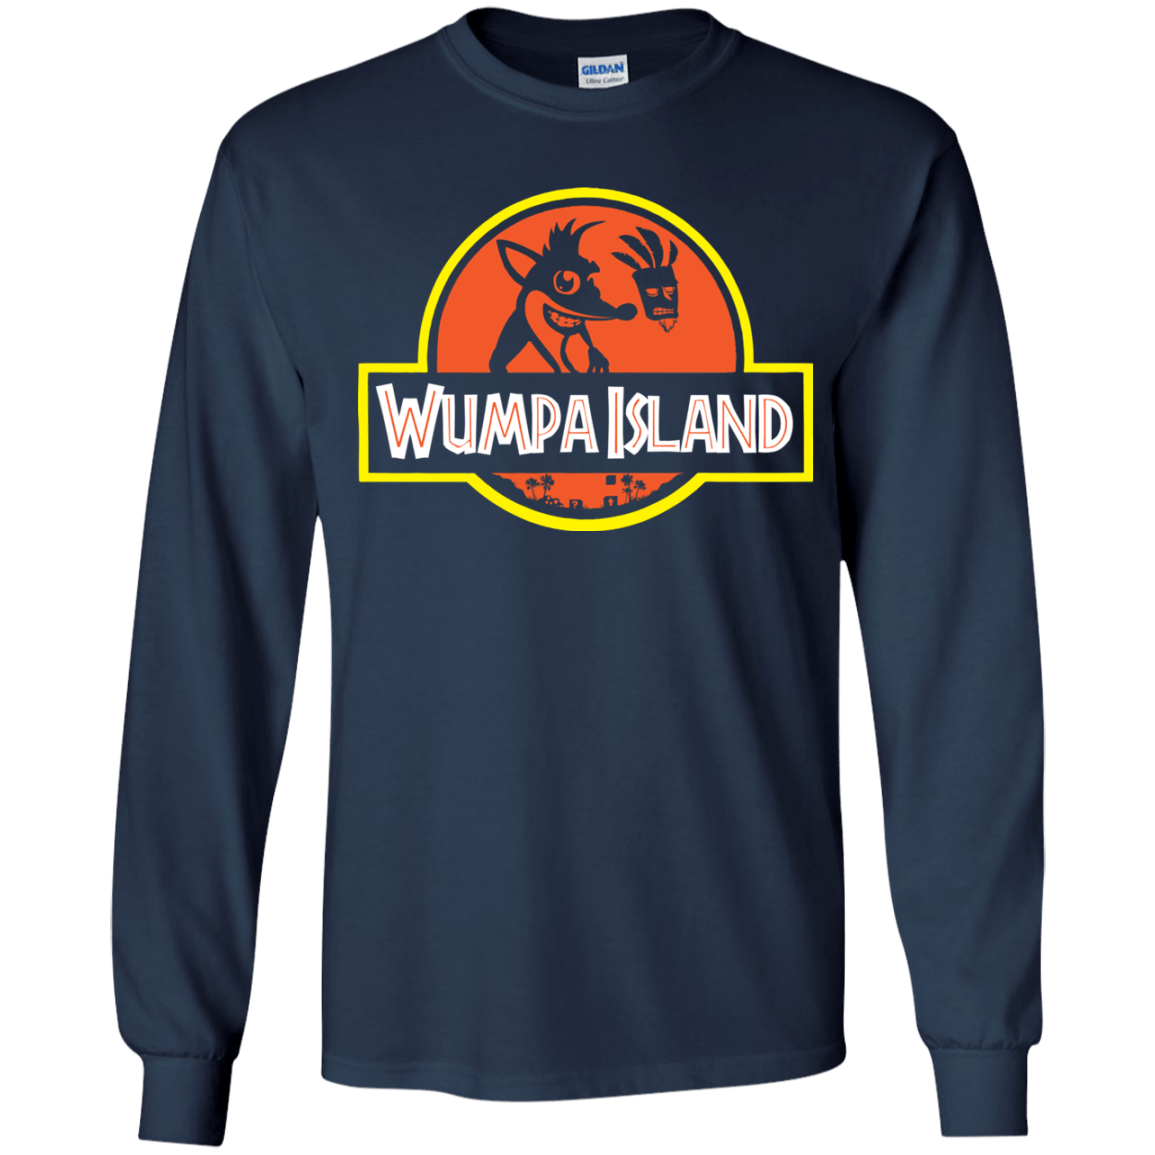 Wumpa Island Youth Long Sleeve T-Shirt